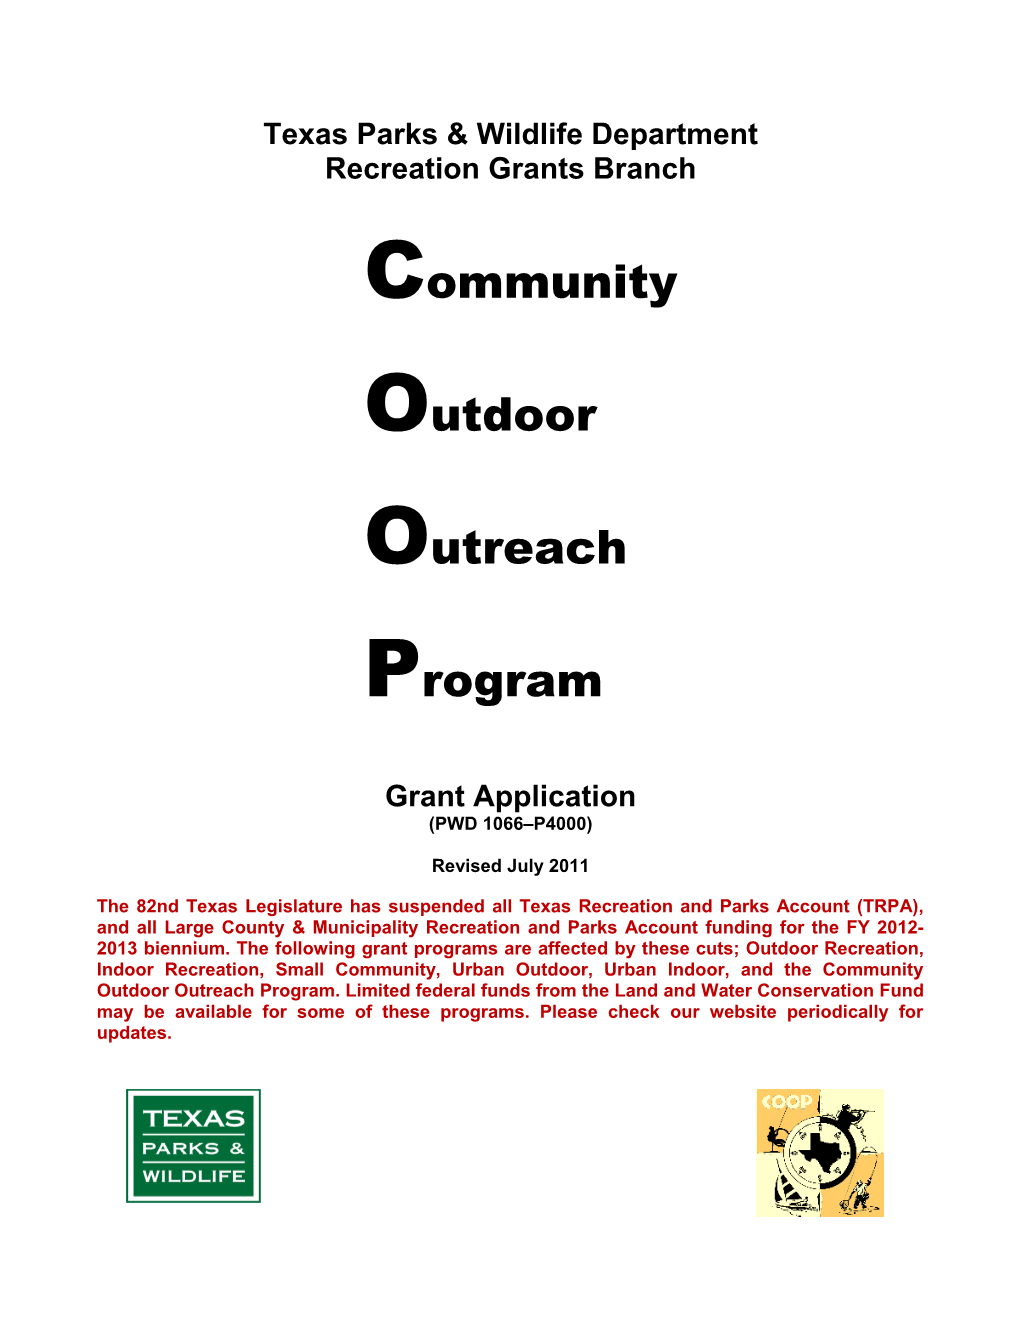 Community Outdoor Outreach Program Grant Application